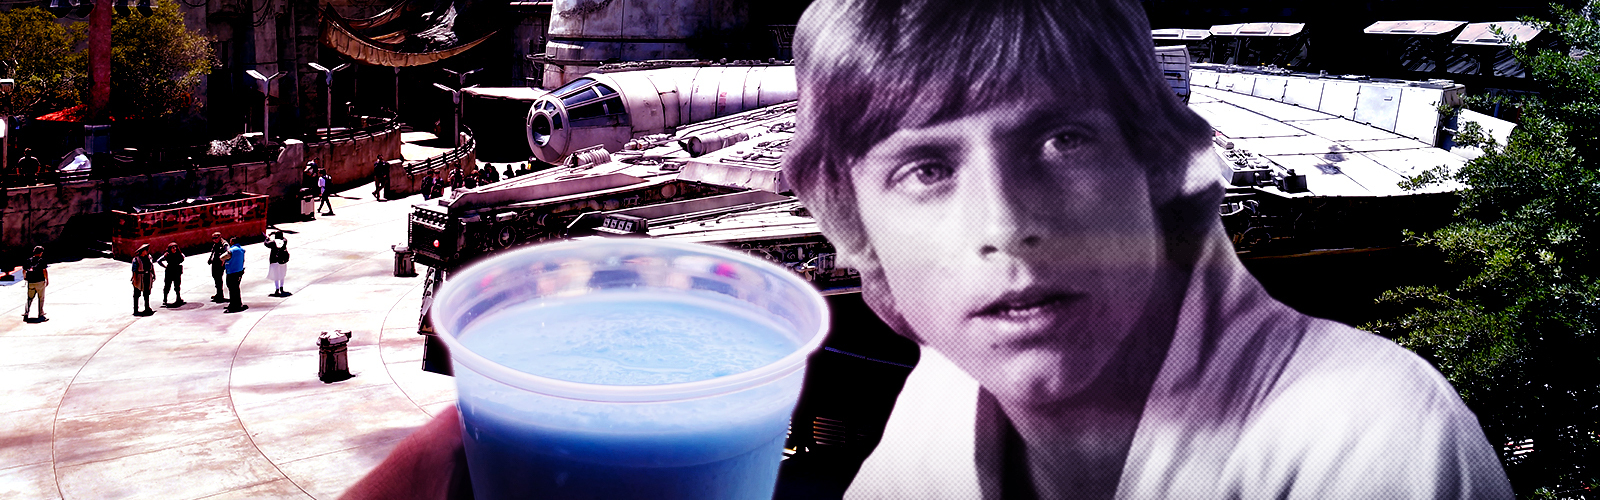 Star Wars Blue Milk Review